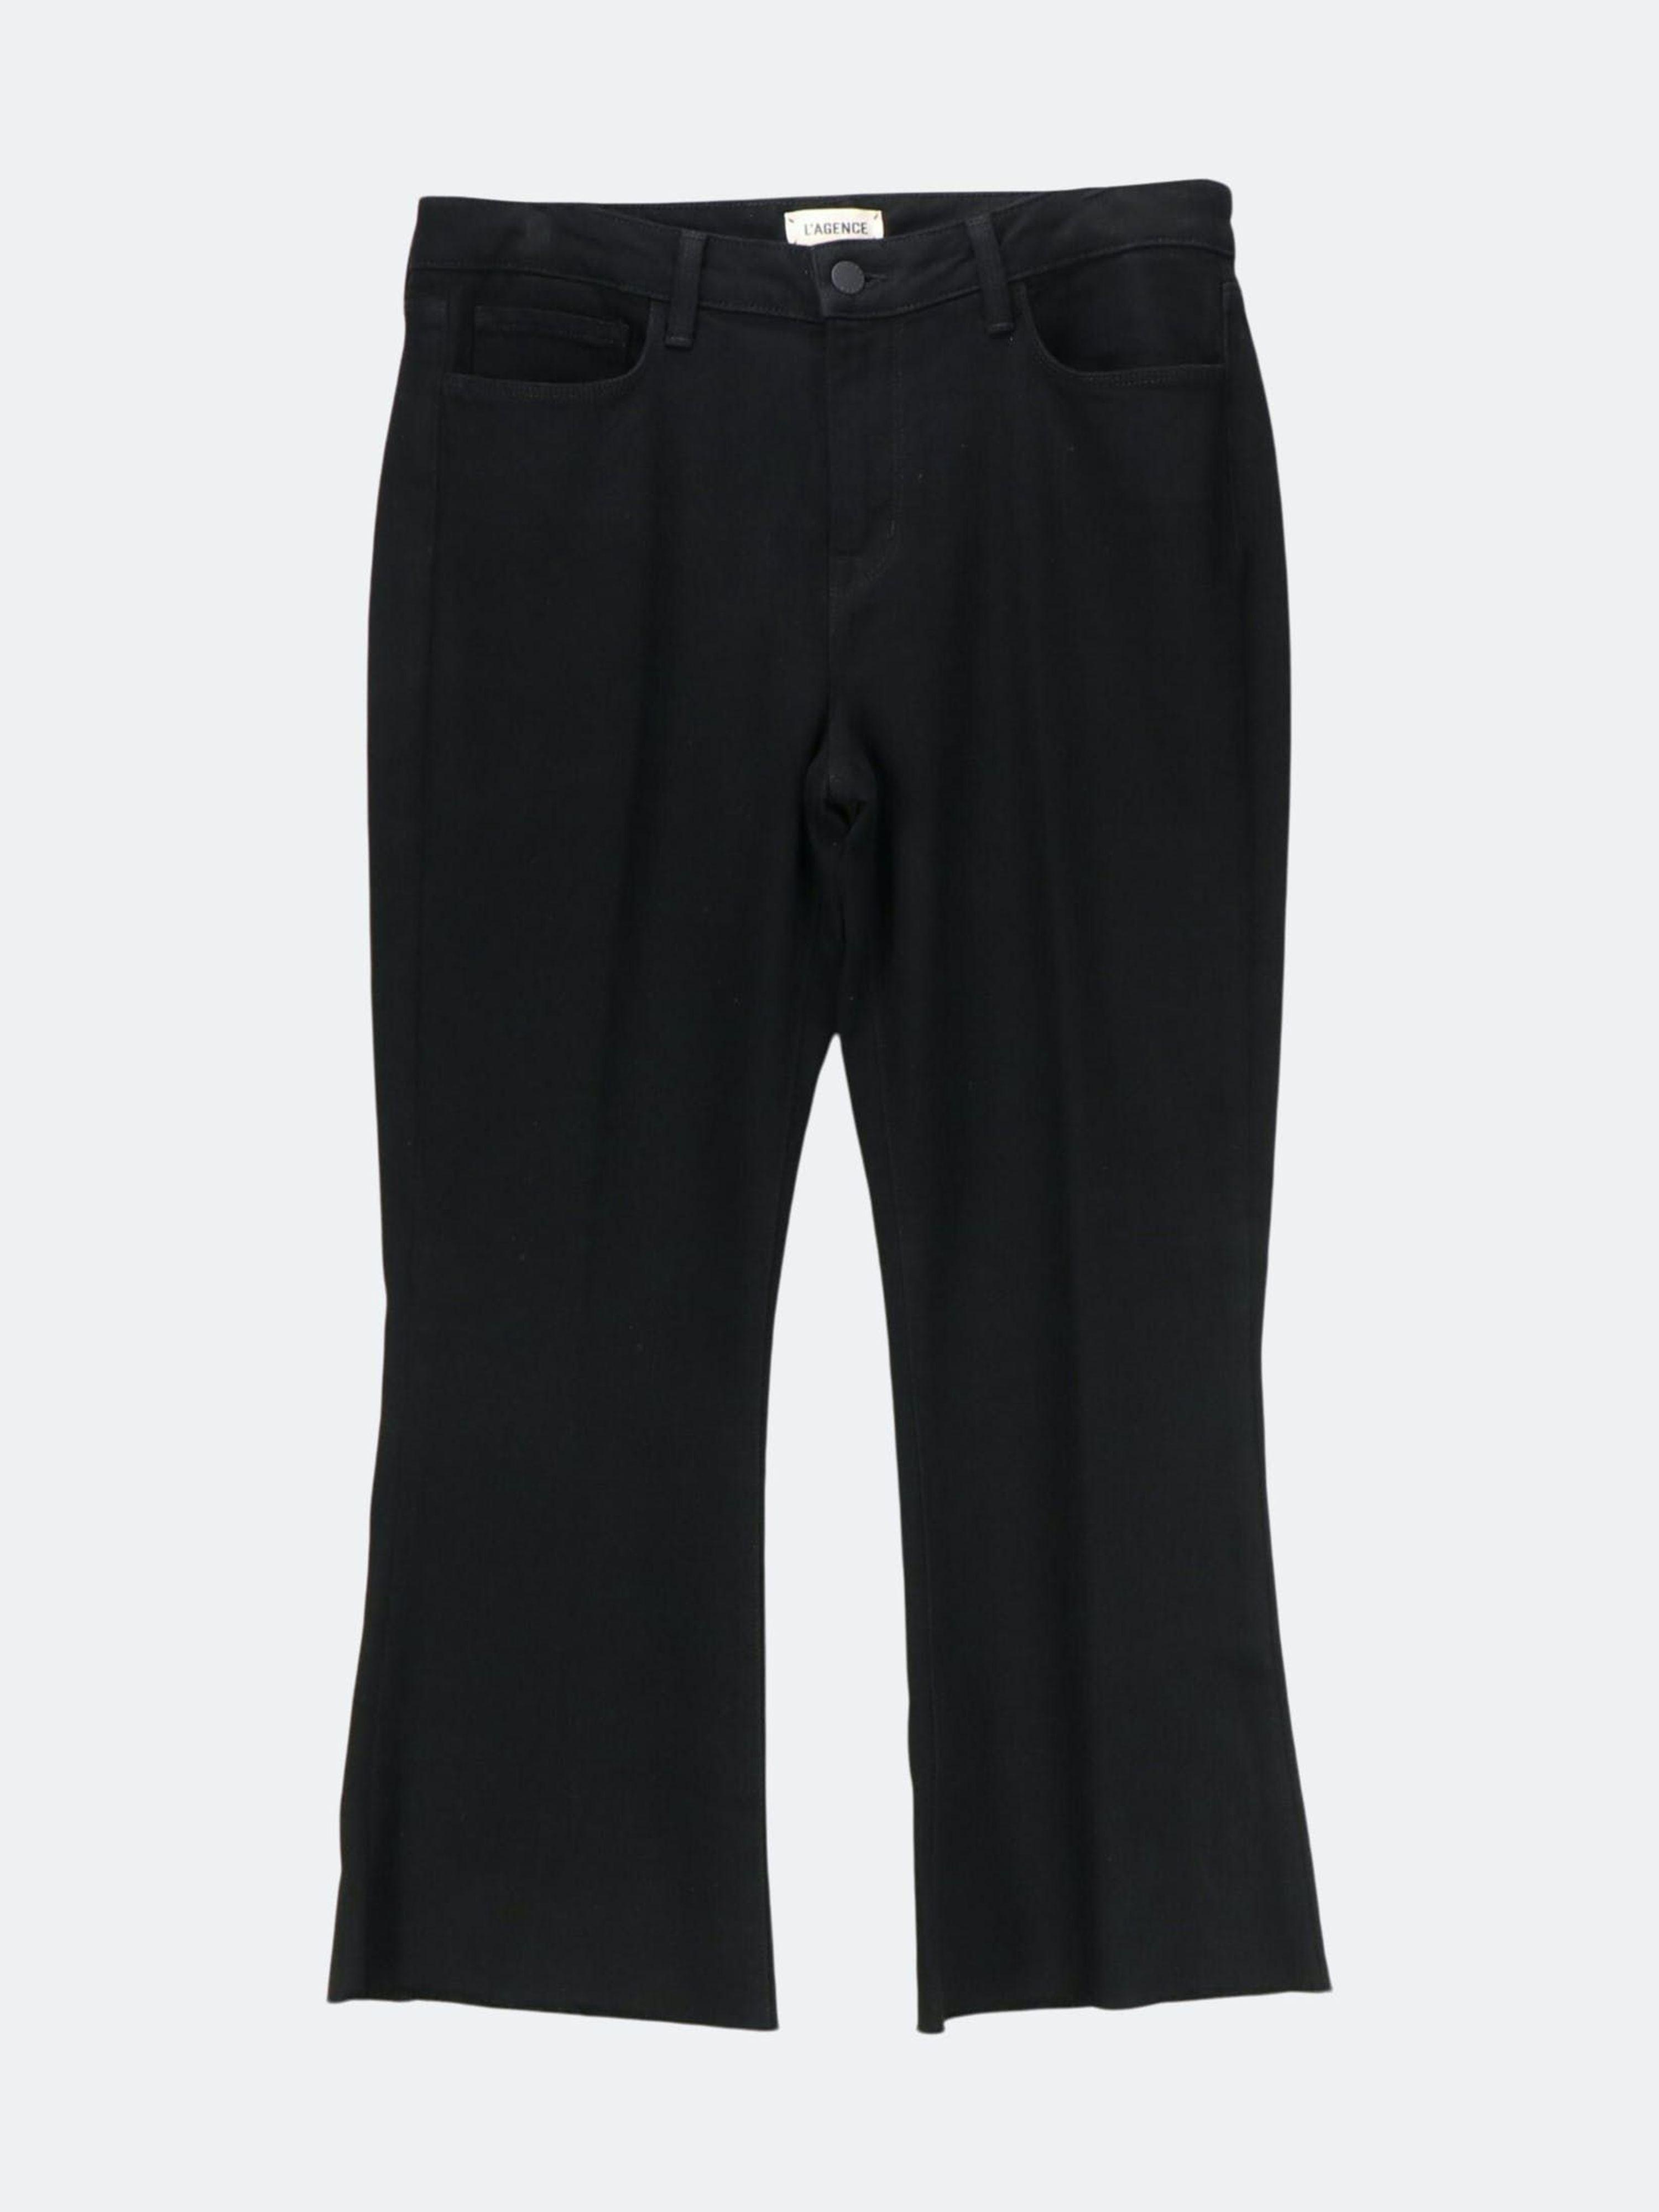 L'Agence Noir Sophia High Rise Cropped Flare Pants & Capri in Black